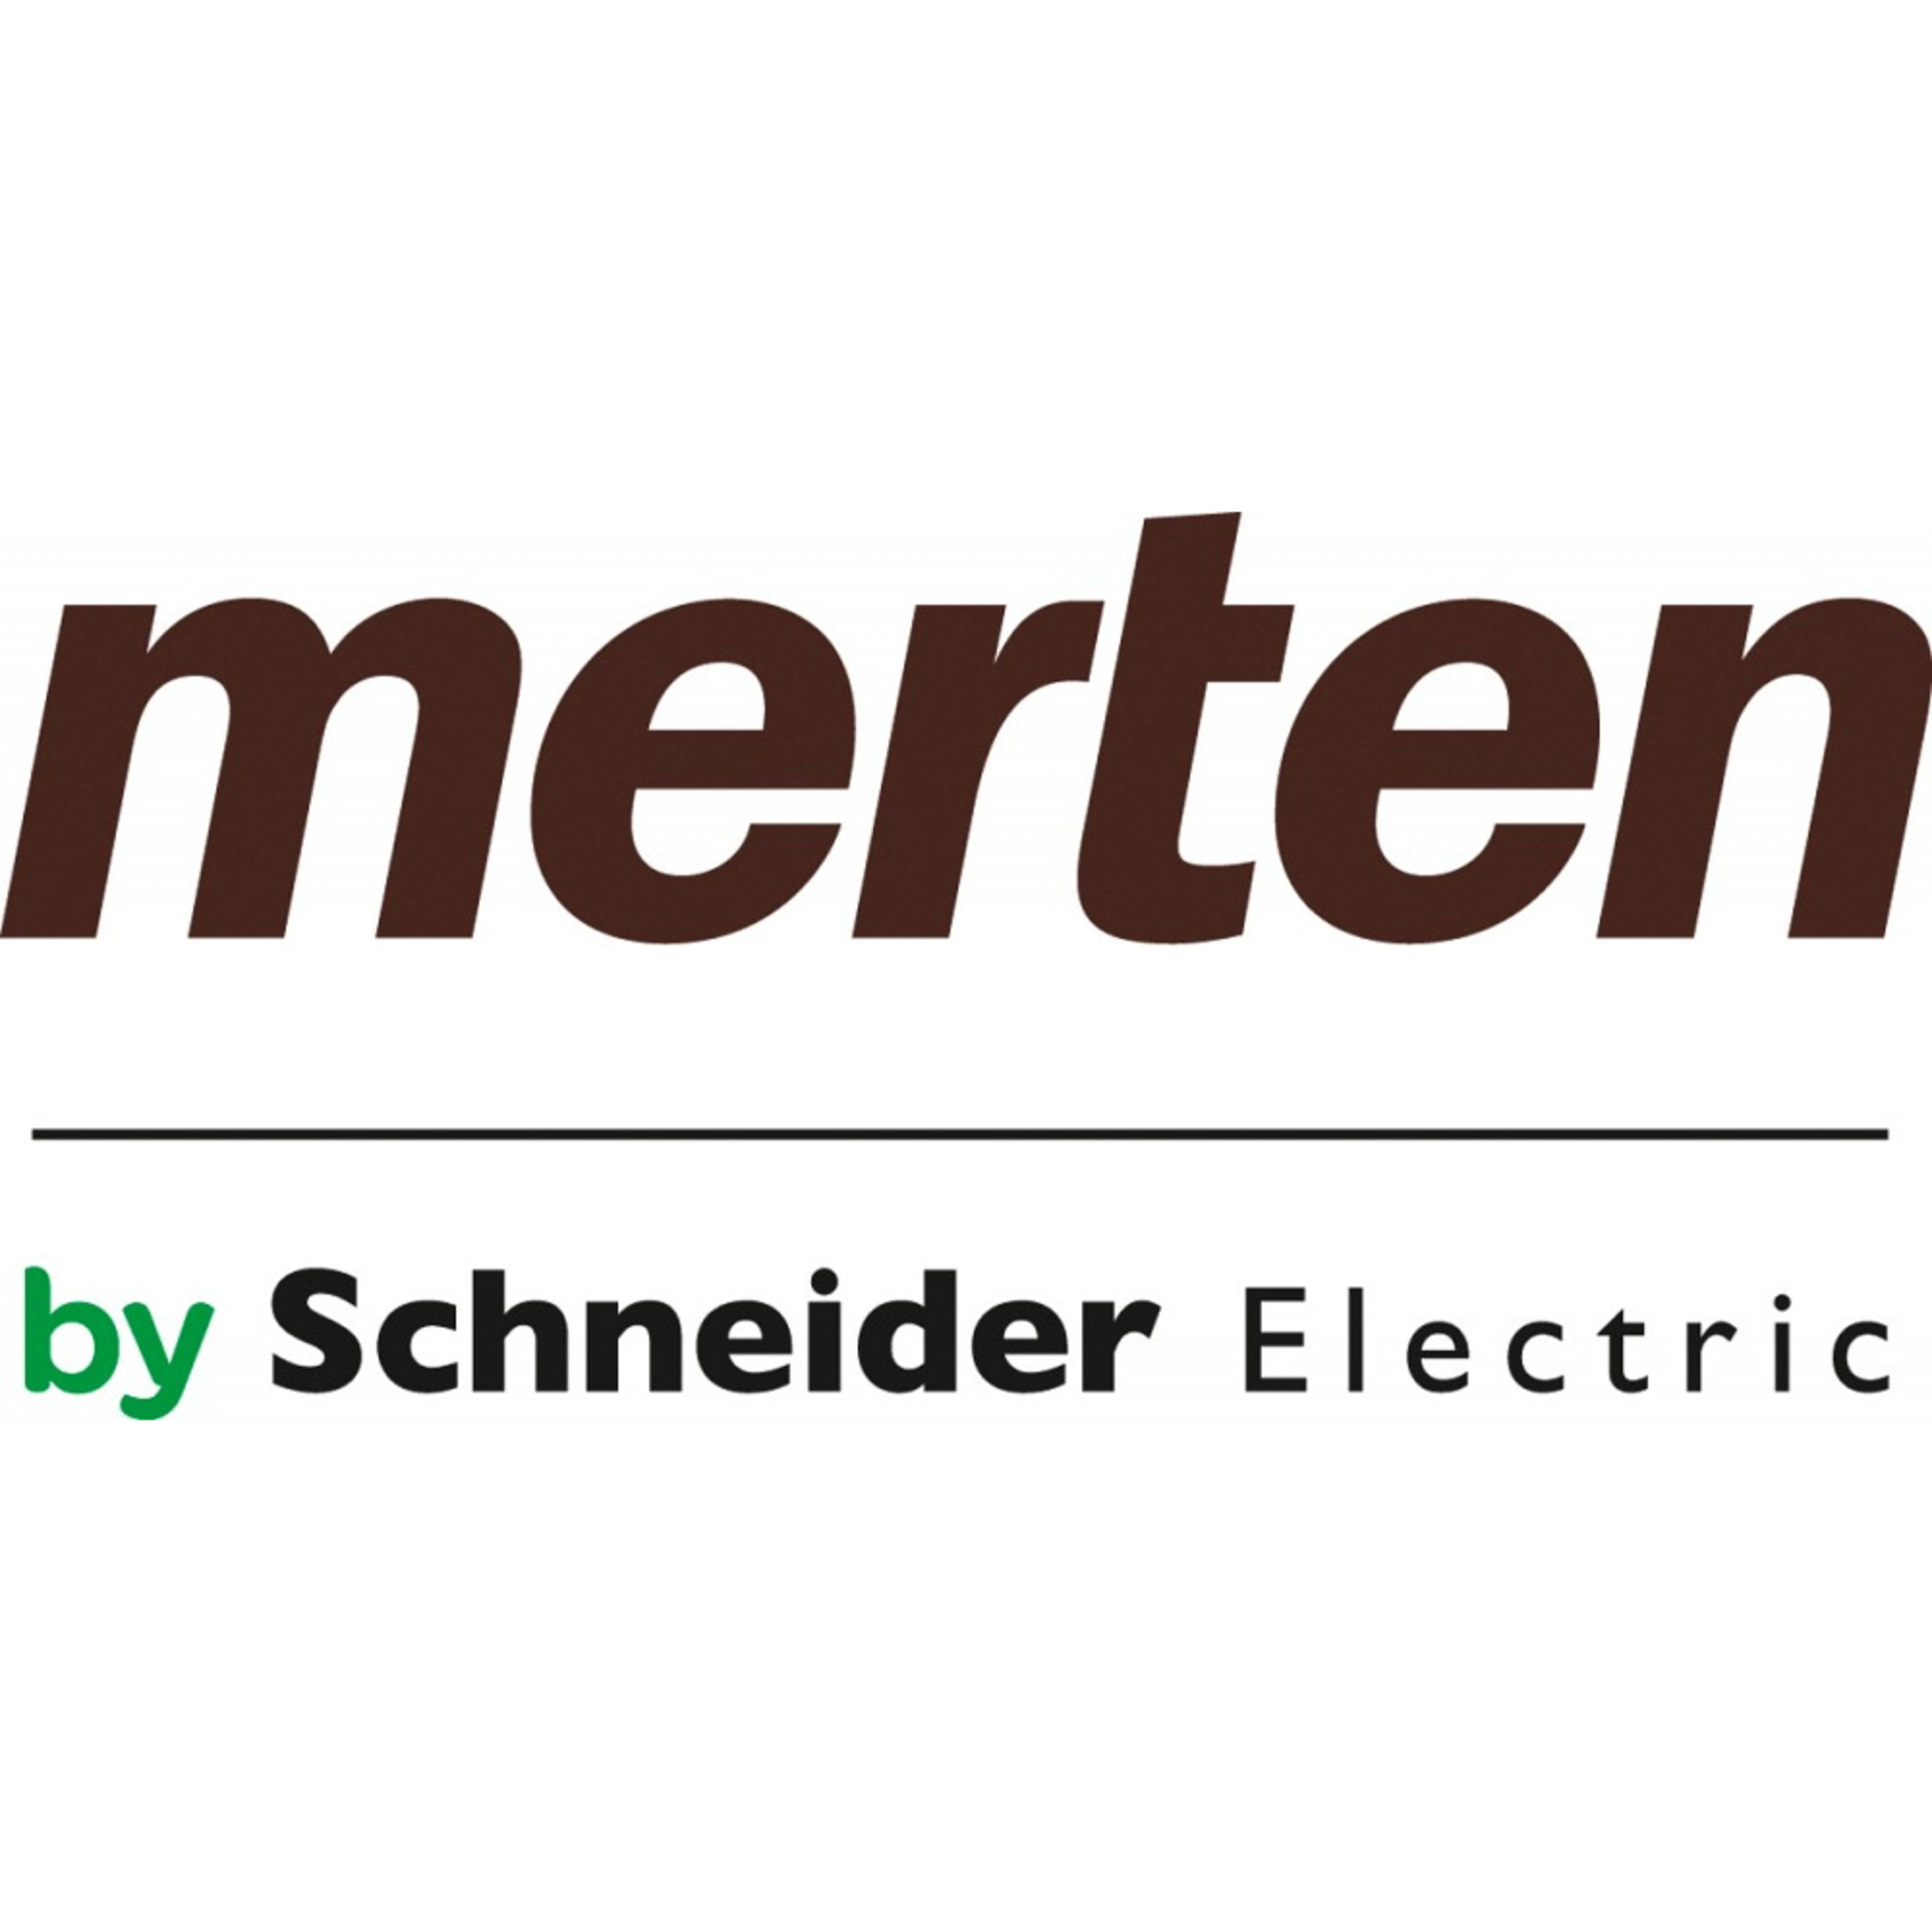 Merten Logo bei Elektro Katers Installations GmbH in Dillingen